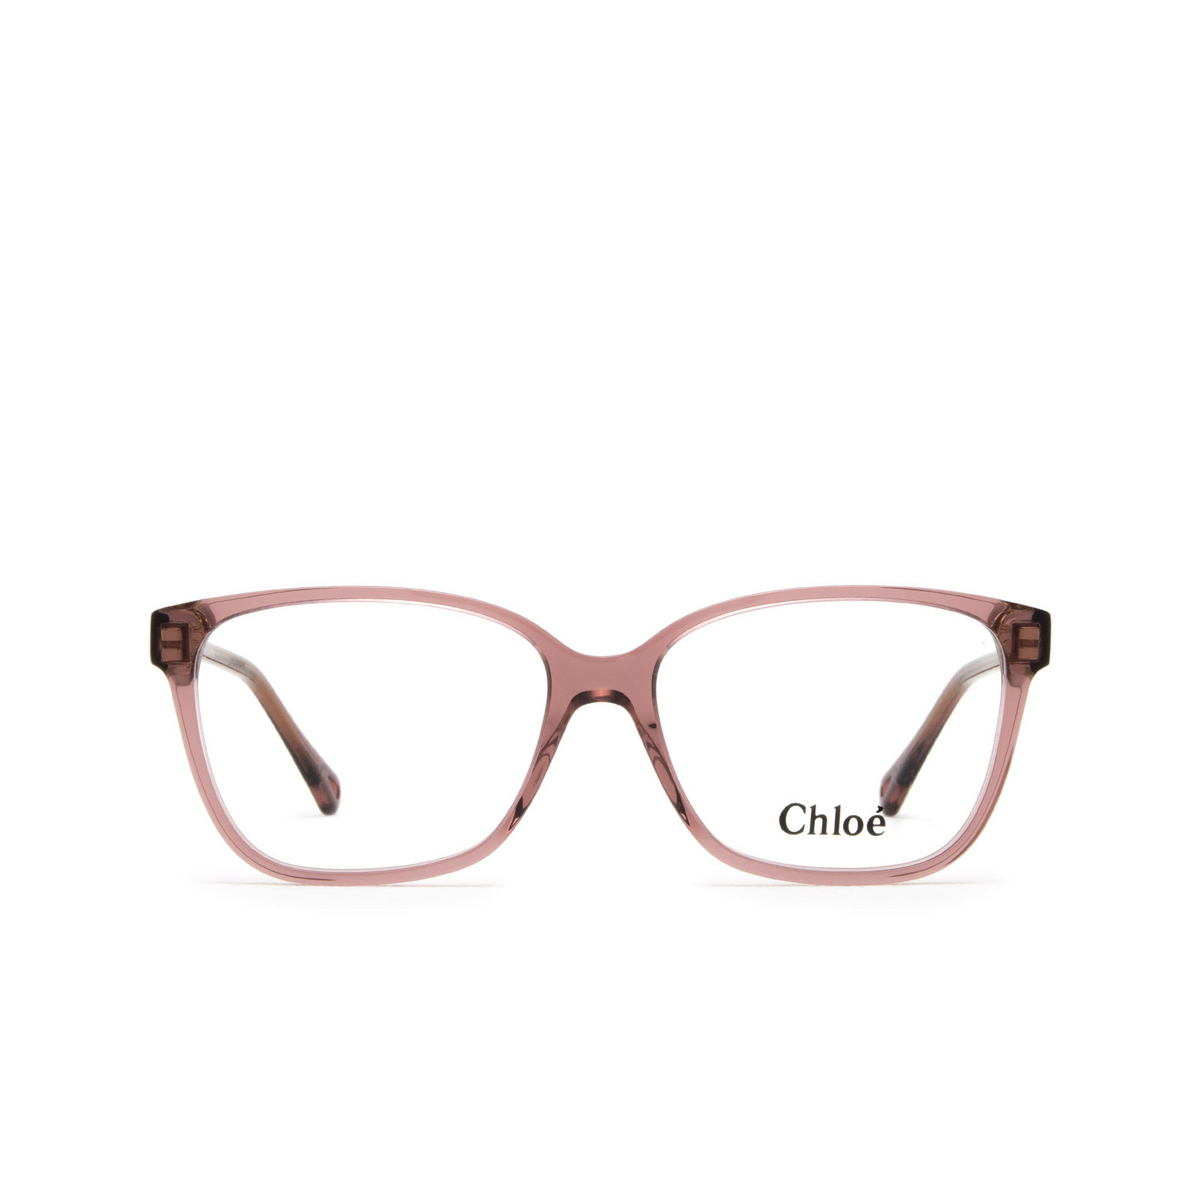 Chloé® Rectangle Eyeglasses: CH0115O color 004 Transparent Pink - front view